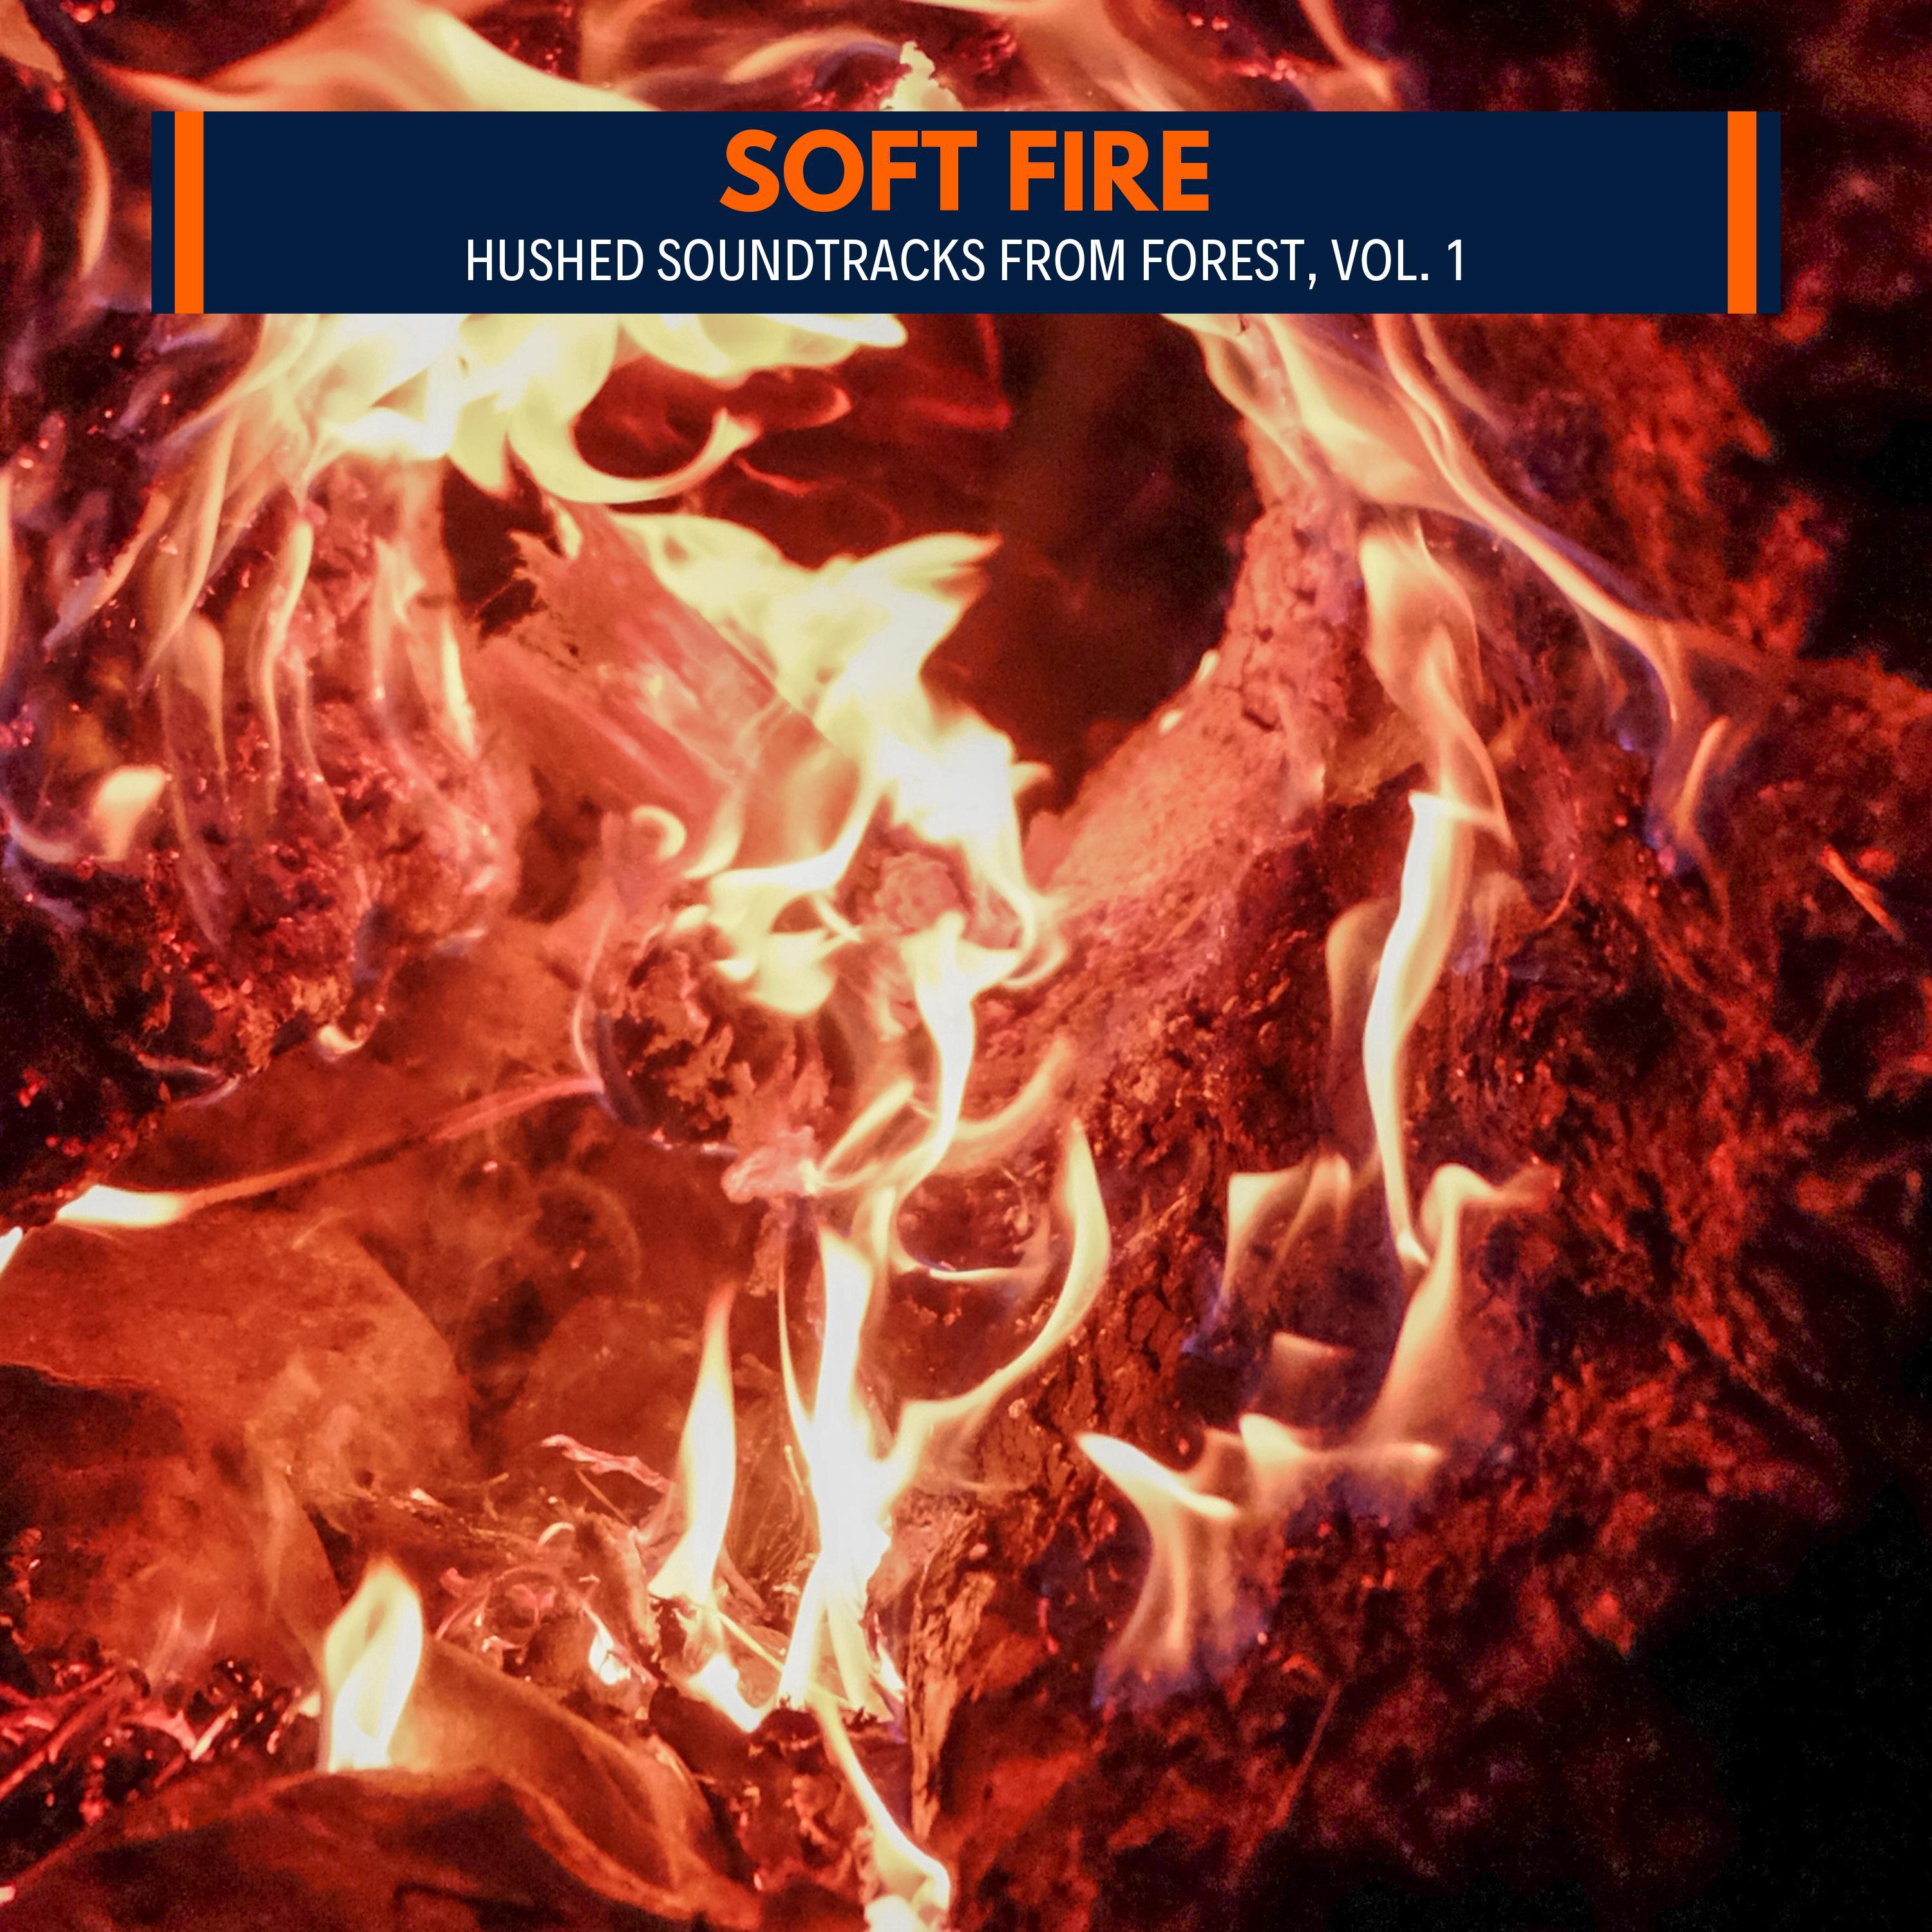 Steady Flames Nature Music - Healing Fire Sound